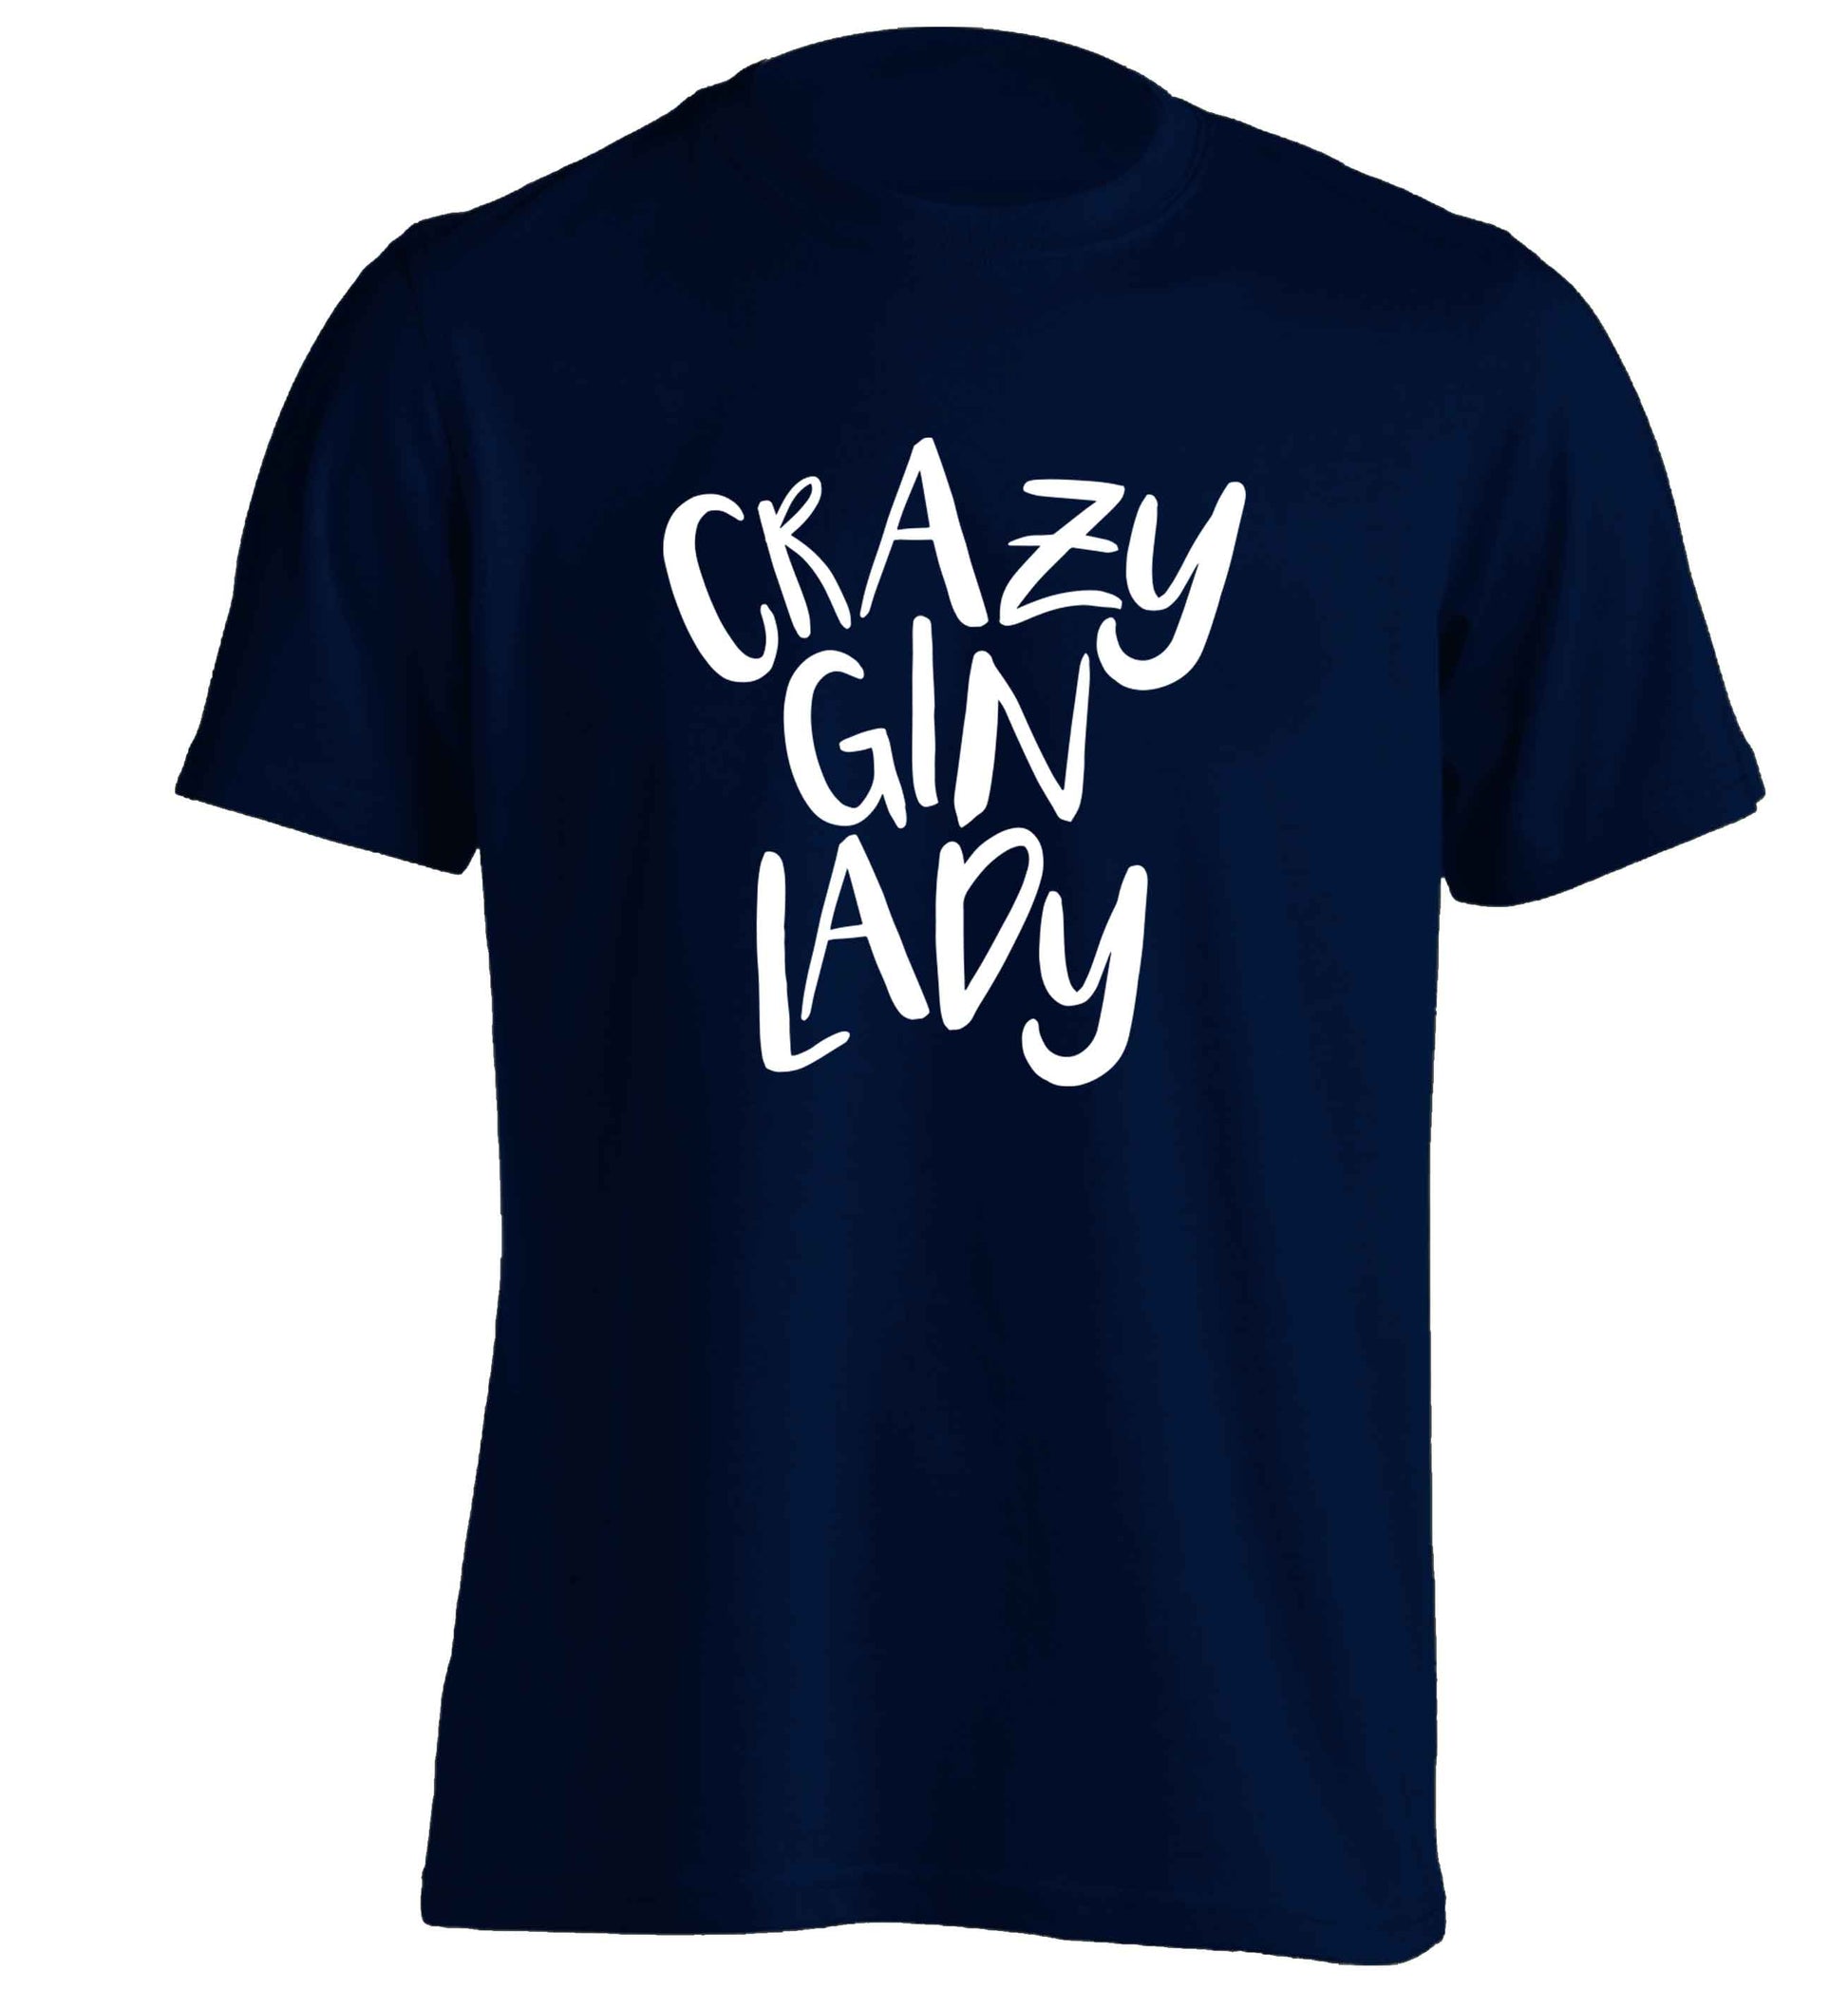 Crazy gin lady adults unisex navy Tshirt 2XL